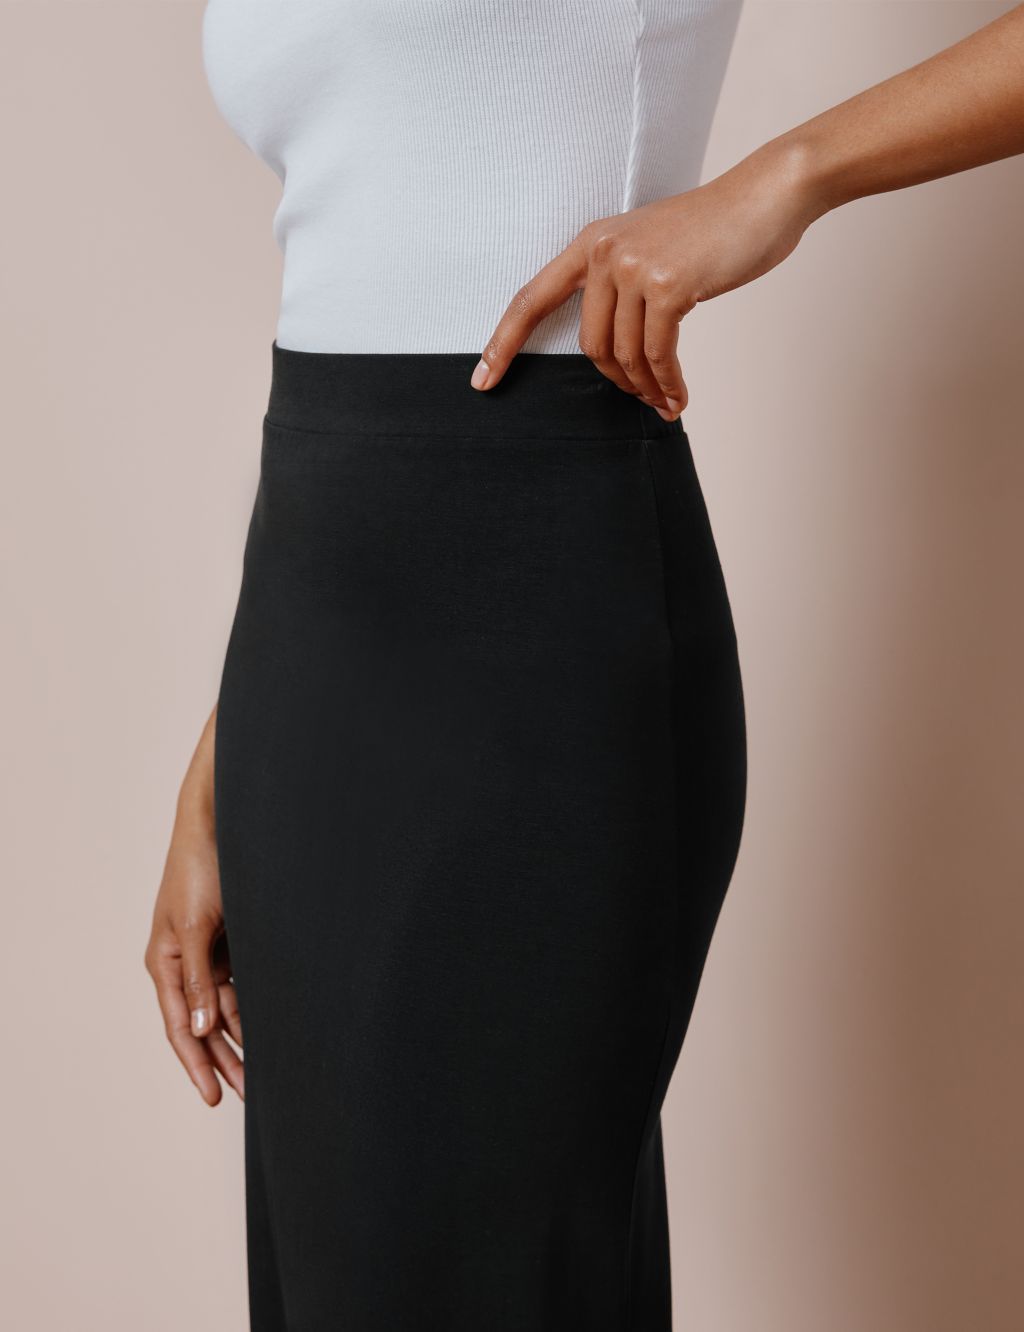 Buy Jersey Maxi Pencil Skirt | Albaray | M&S